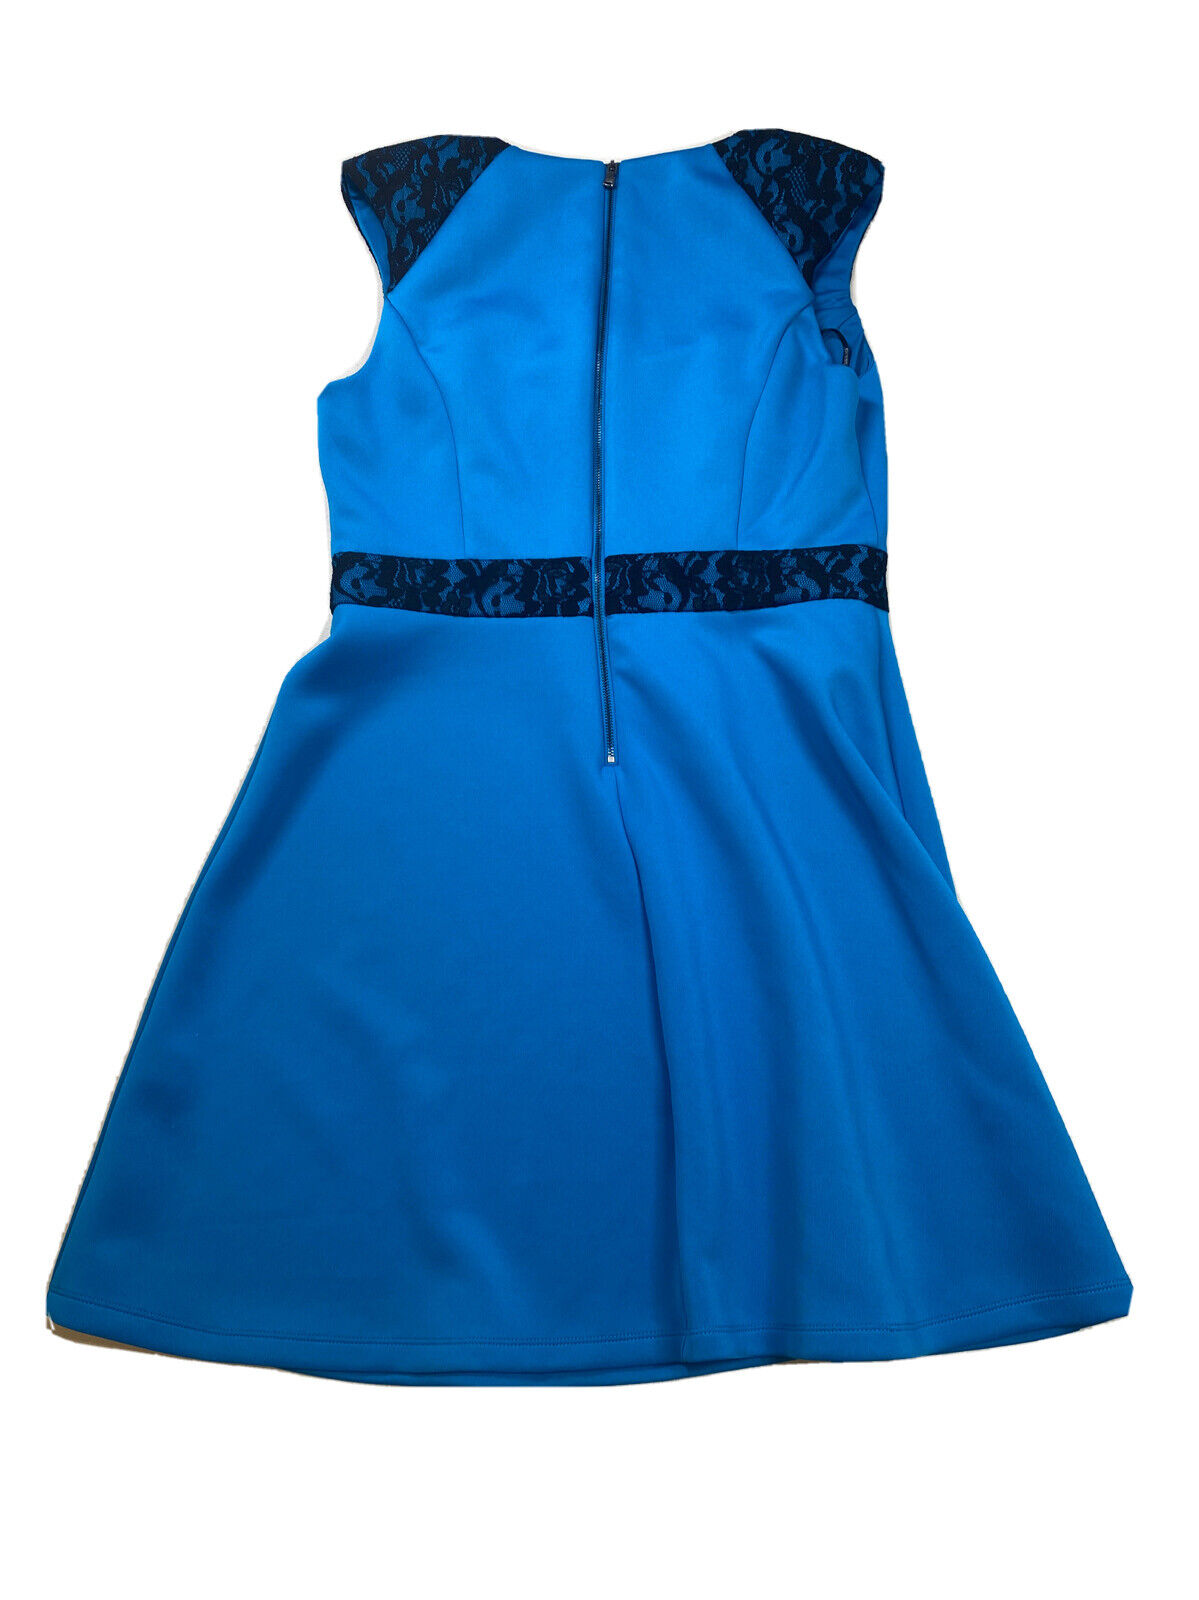 Guess Women's Blue Lace Accent Sleeveless Shift Dress - 12